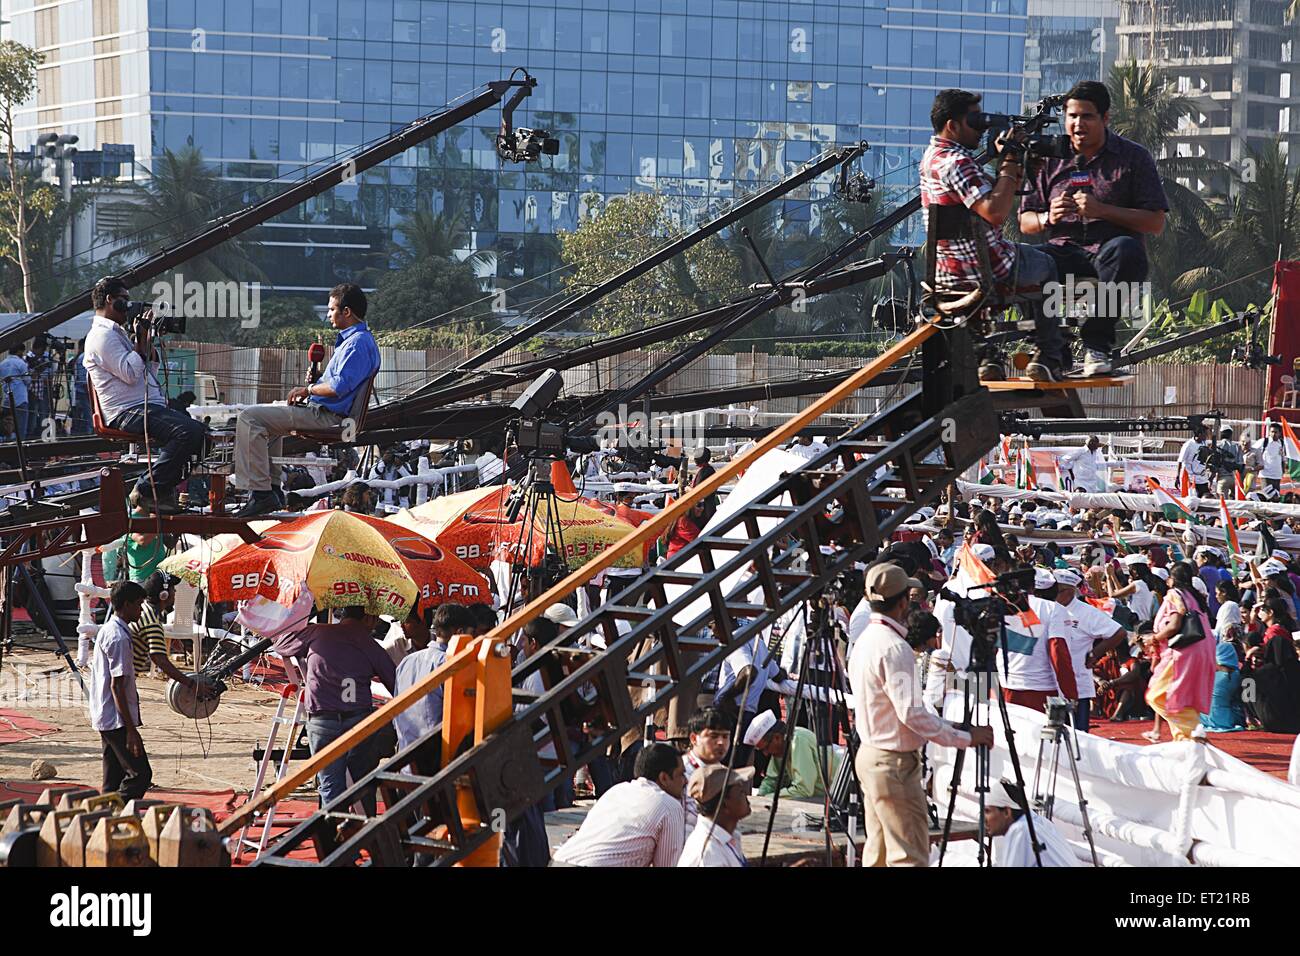 Video Camera and Reporter Mounted on Crane Coverage Mumbai Maharashtra India Asia Dec 2011 Stock Photo